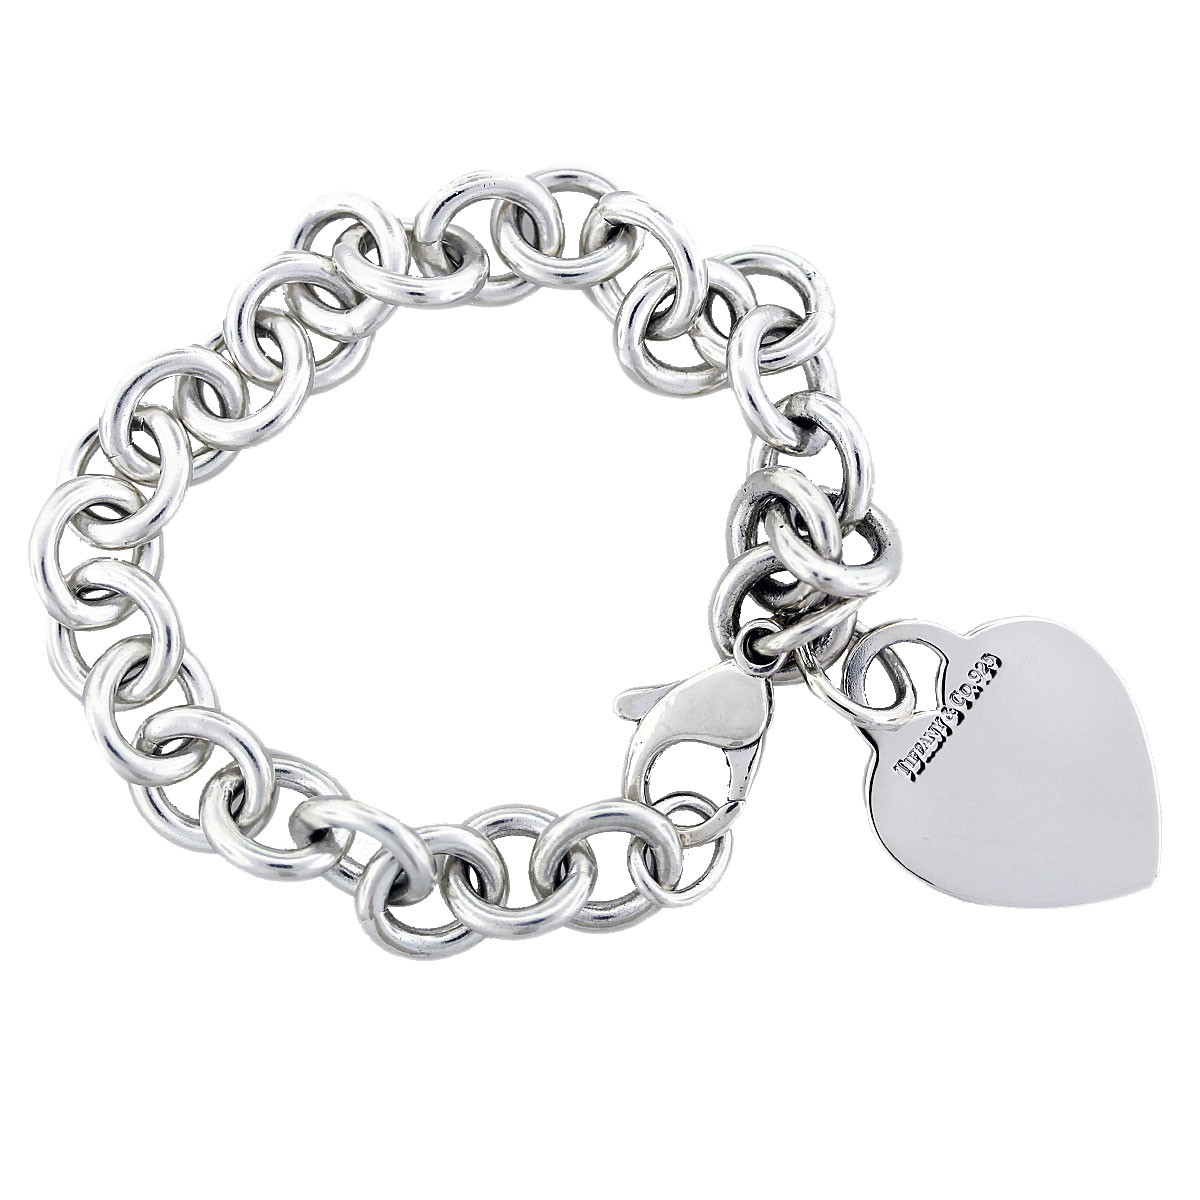 Tiffany And Co Heart Bracelet
 Tiffany & Co Sterling Silver Heart Charm Bracelet